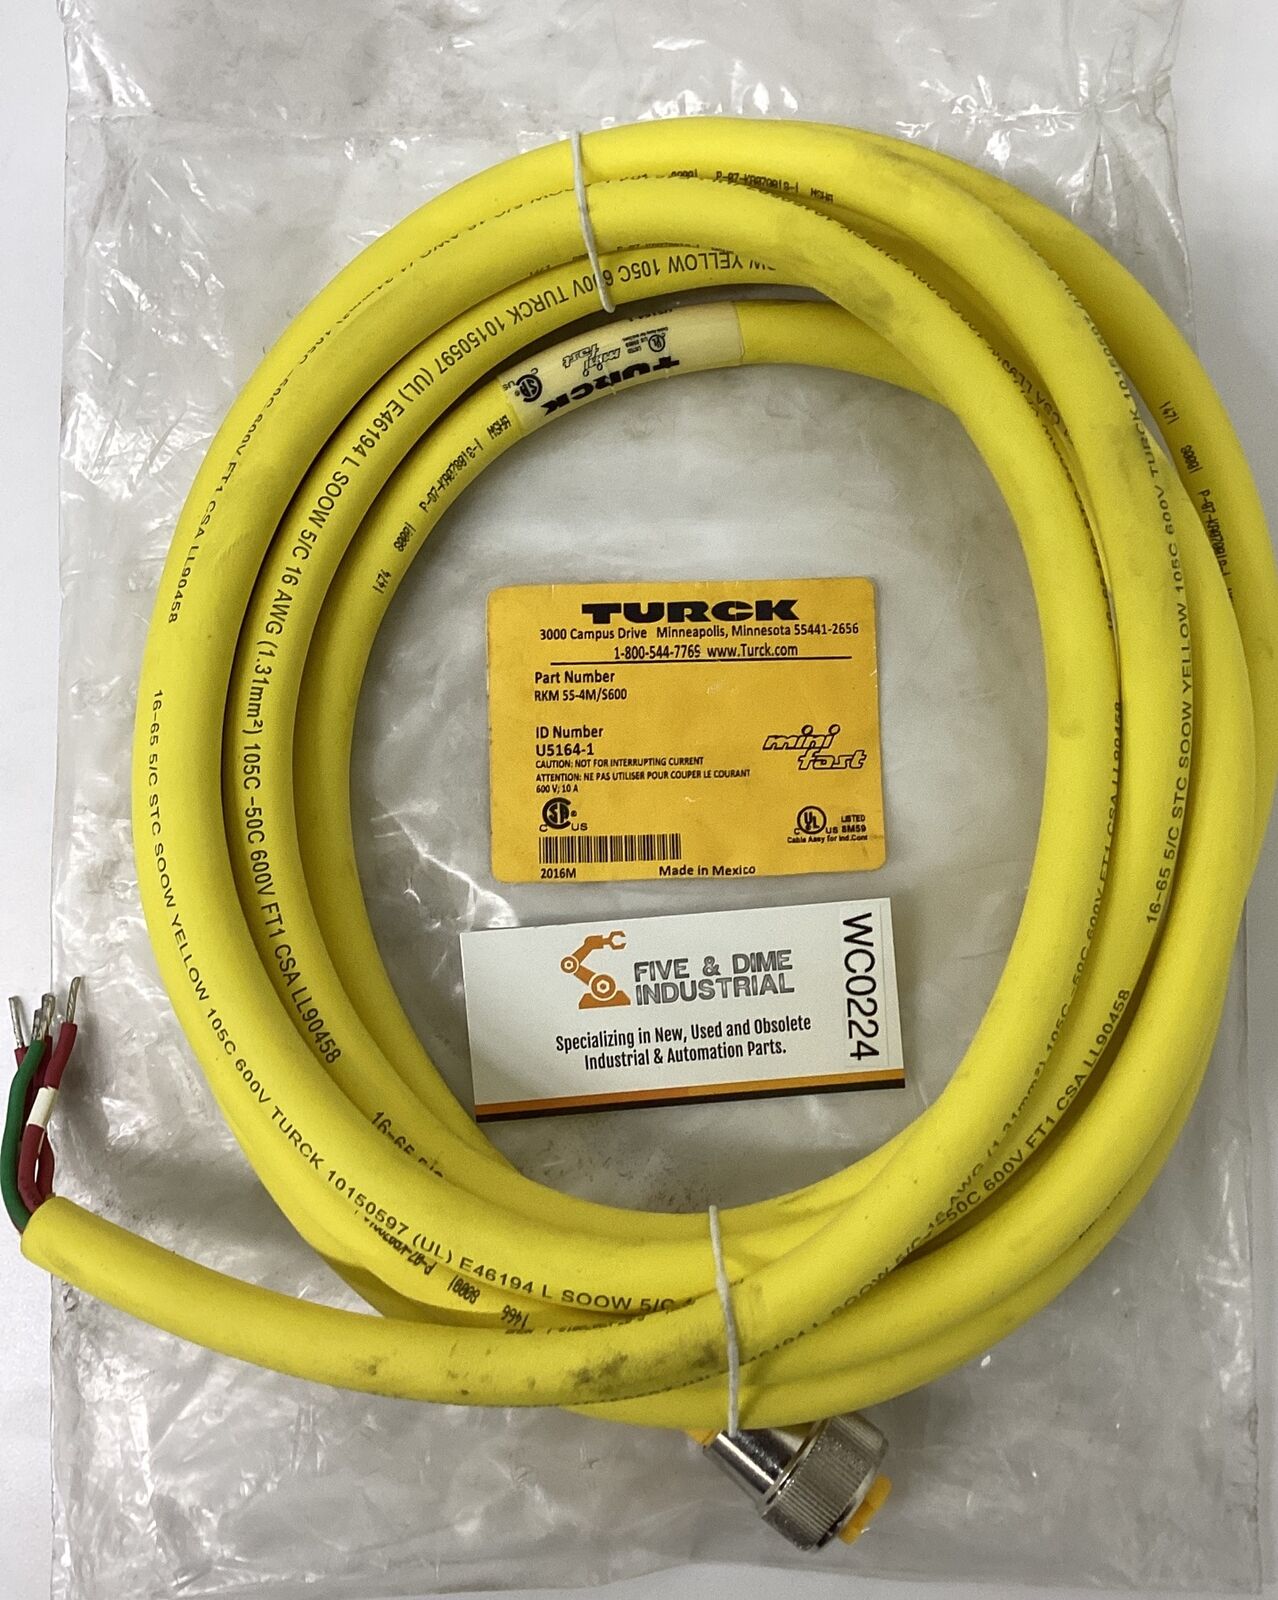 Turck RKM 55-4M/600 / U5164-1 MiniFast 5-Pin 4-Meter Cable Cordset (CBL149)